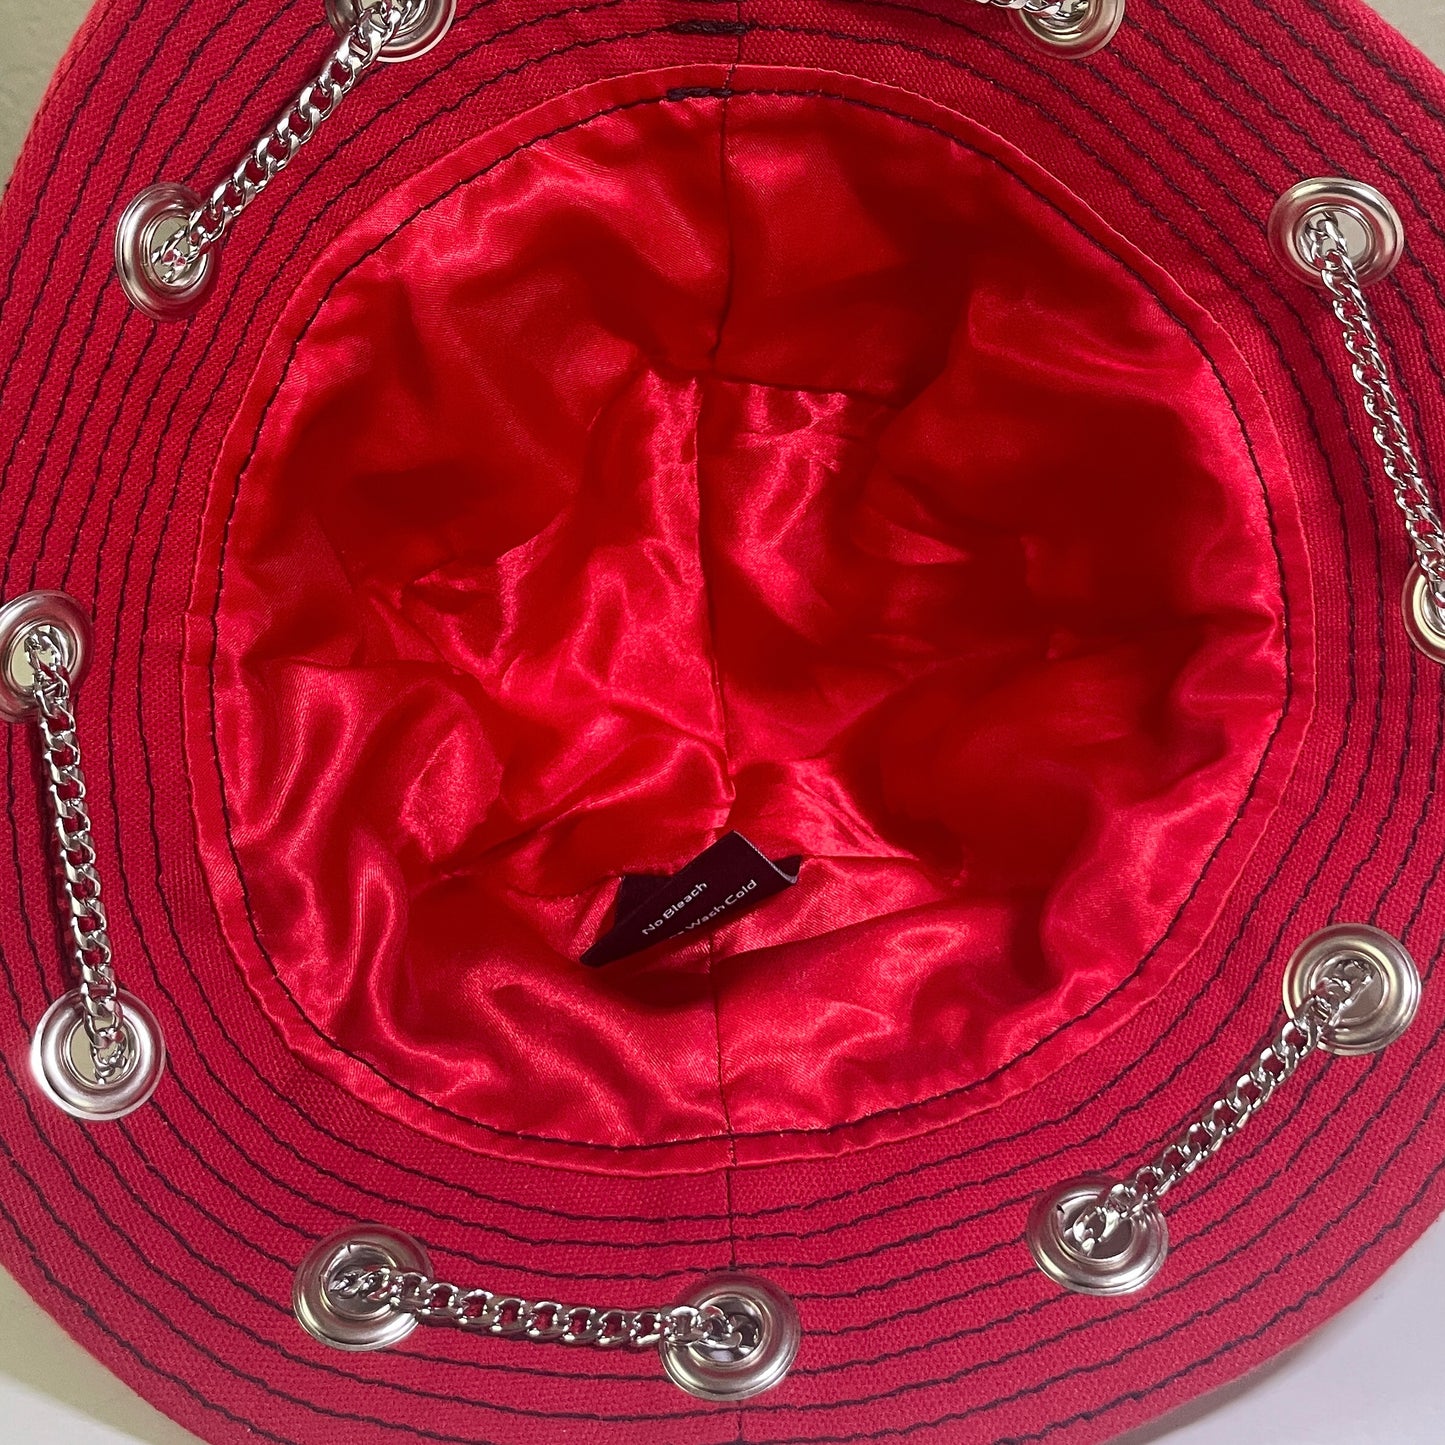 Red and Black Sashiko Bunny Hat 1of1